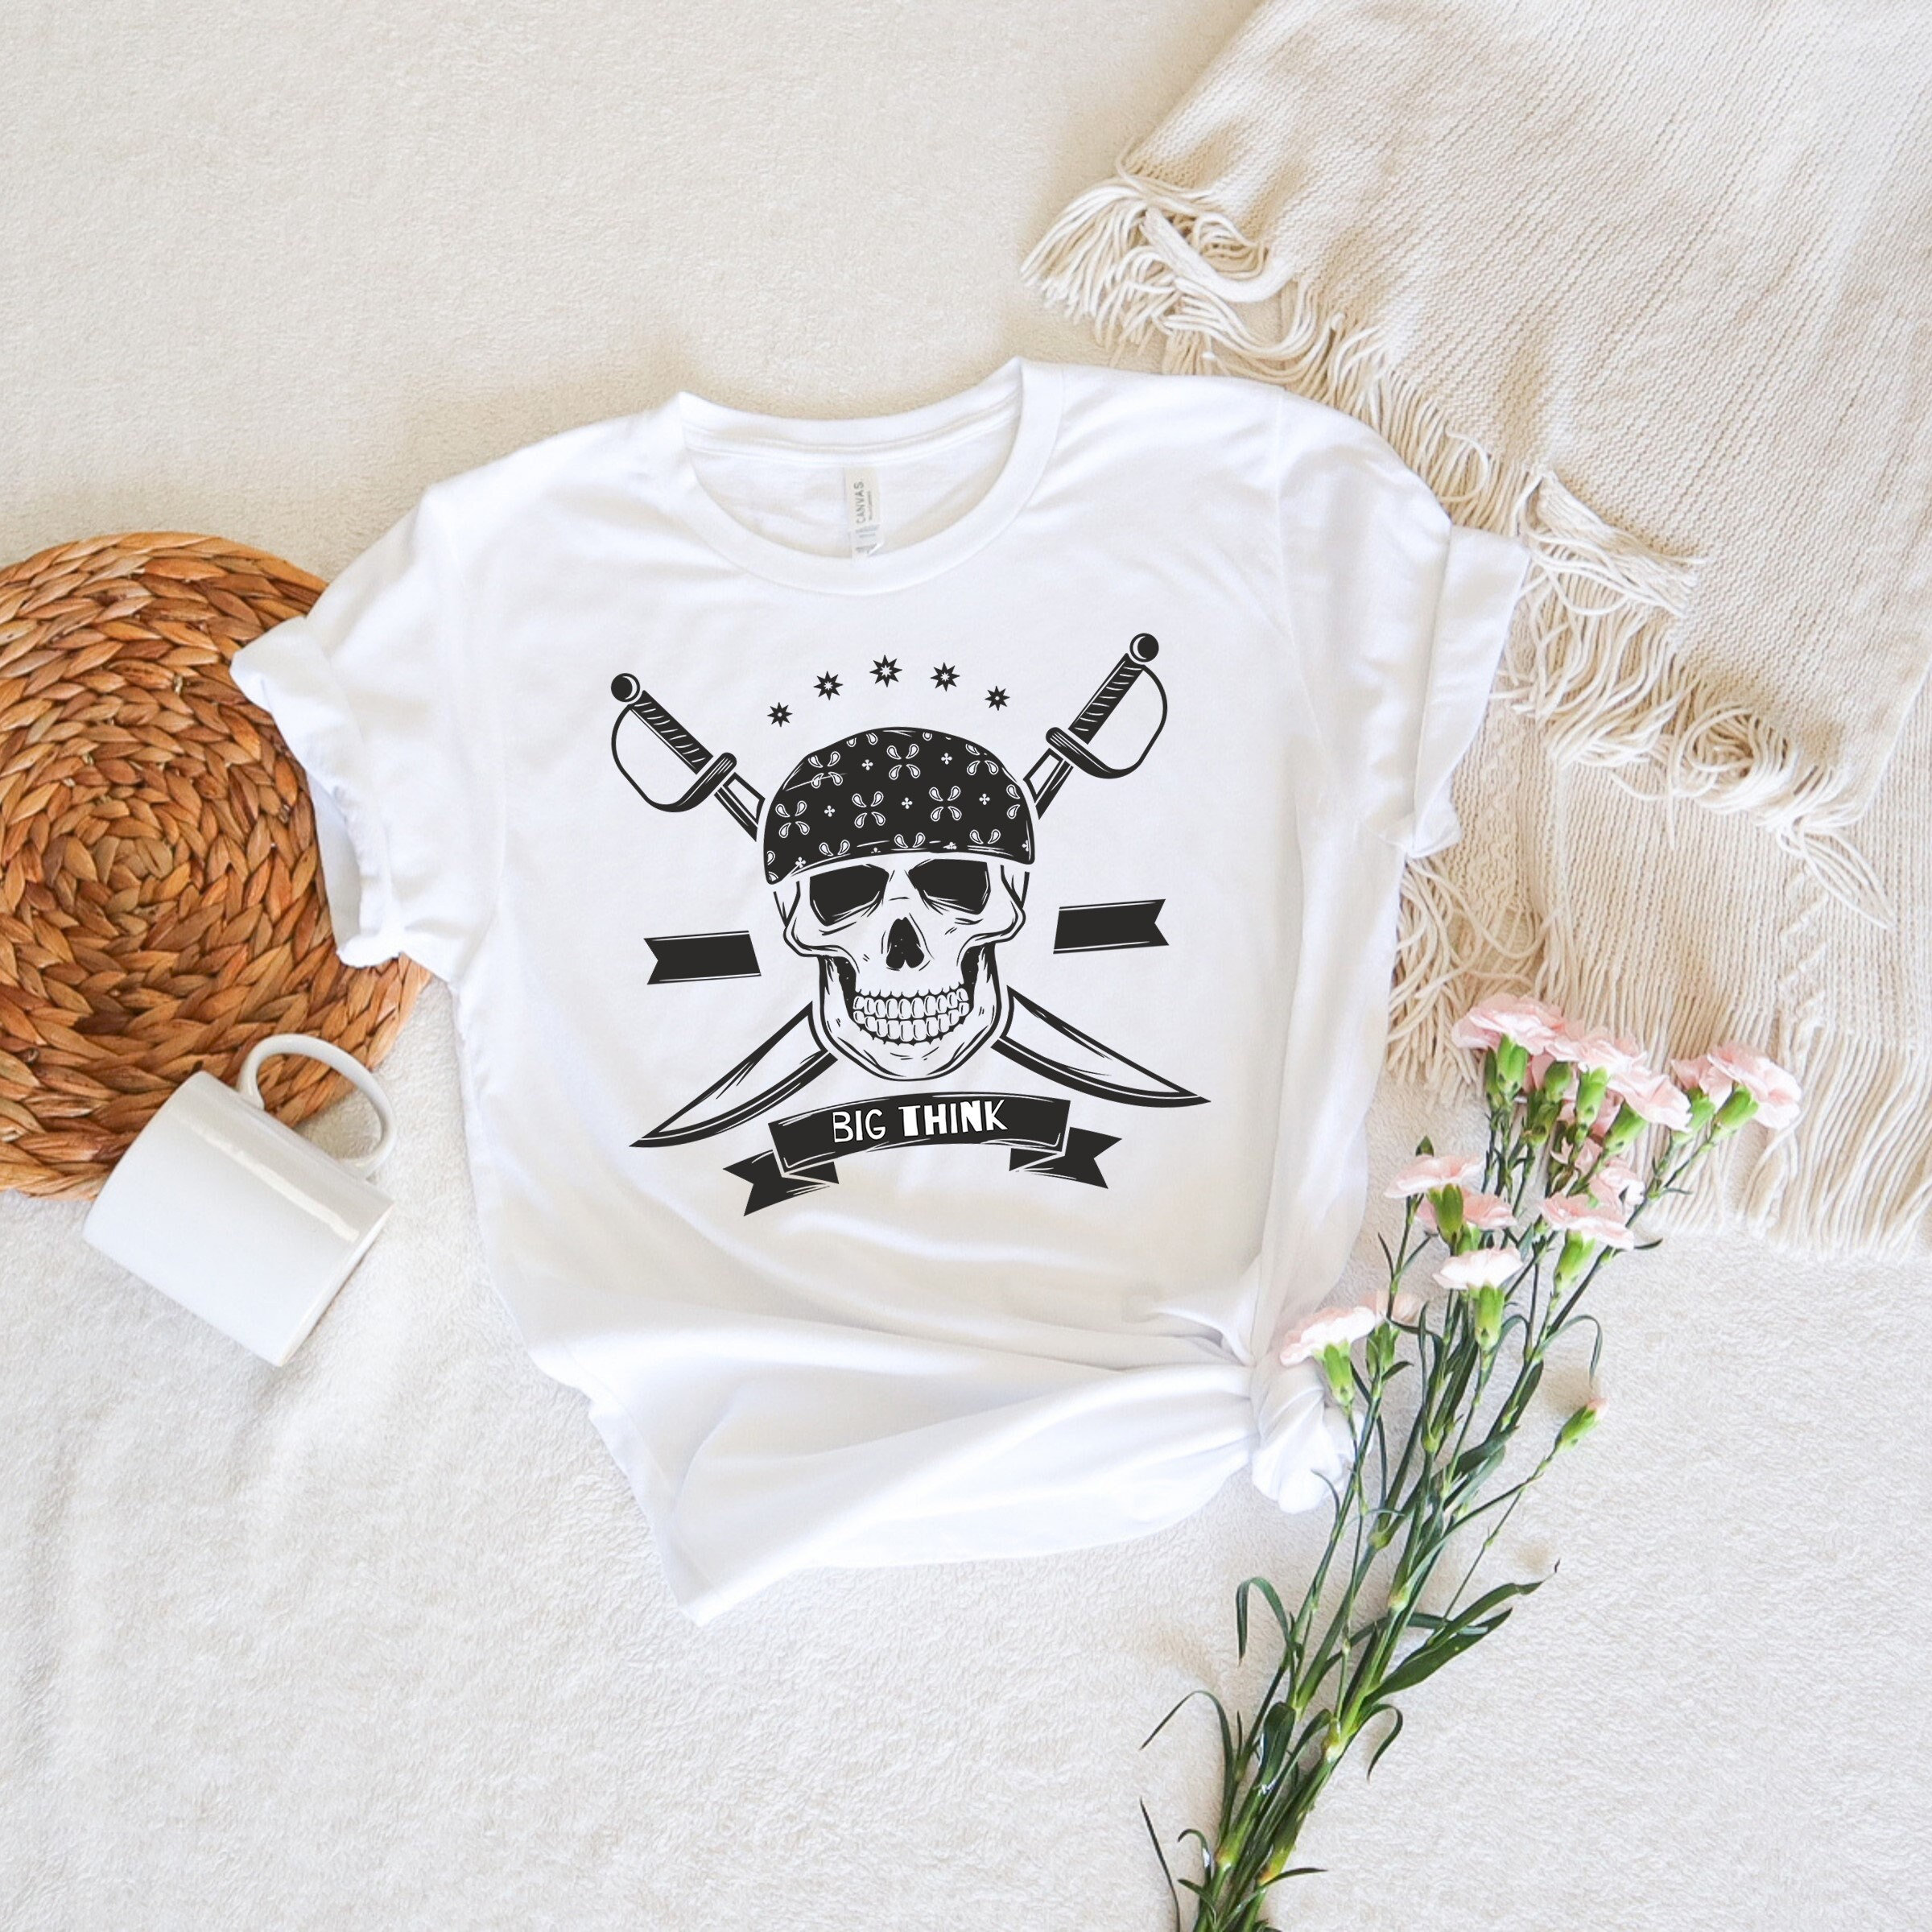 Funny Shirt Off The Shoulder Women's Tee Pirate Shirt Super Soft and Flowy Pirate T-Shirt Skull Shirt.